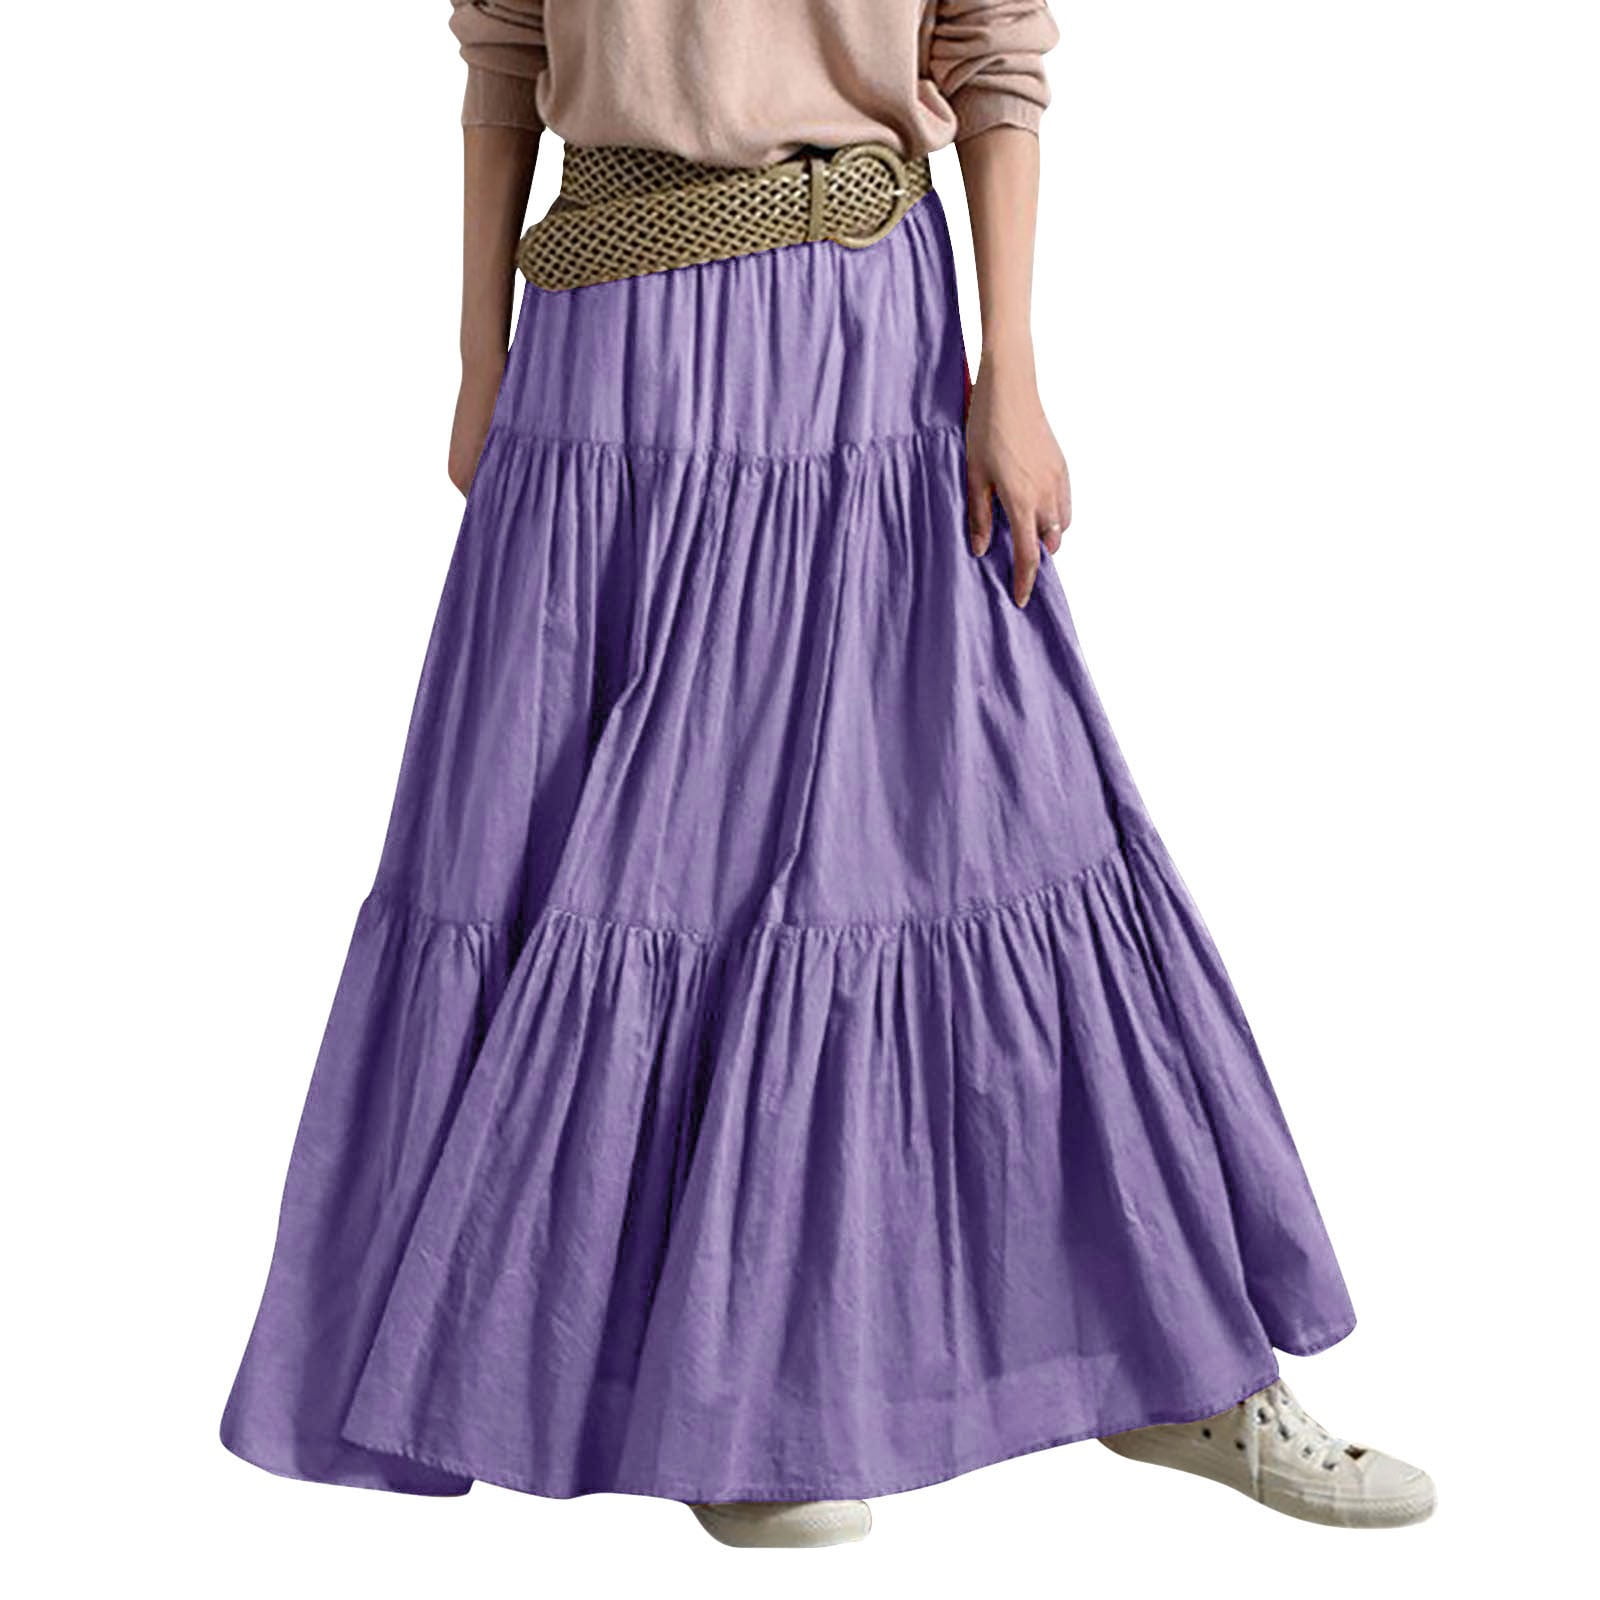 Aayomet Maxi Skirts For Women Women Floral Print Elastic Waist Band Midi  Skirt Double Layer Puffy Princess Skirt,Purple Small 